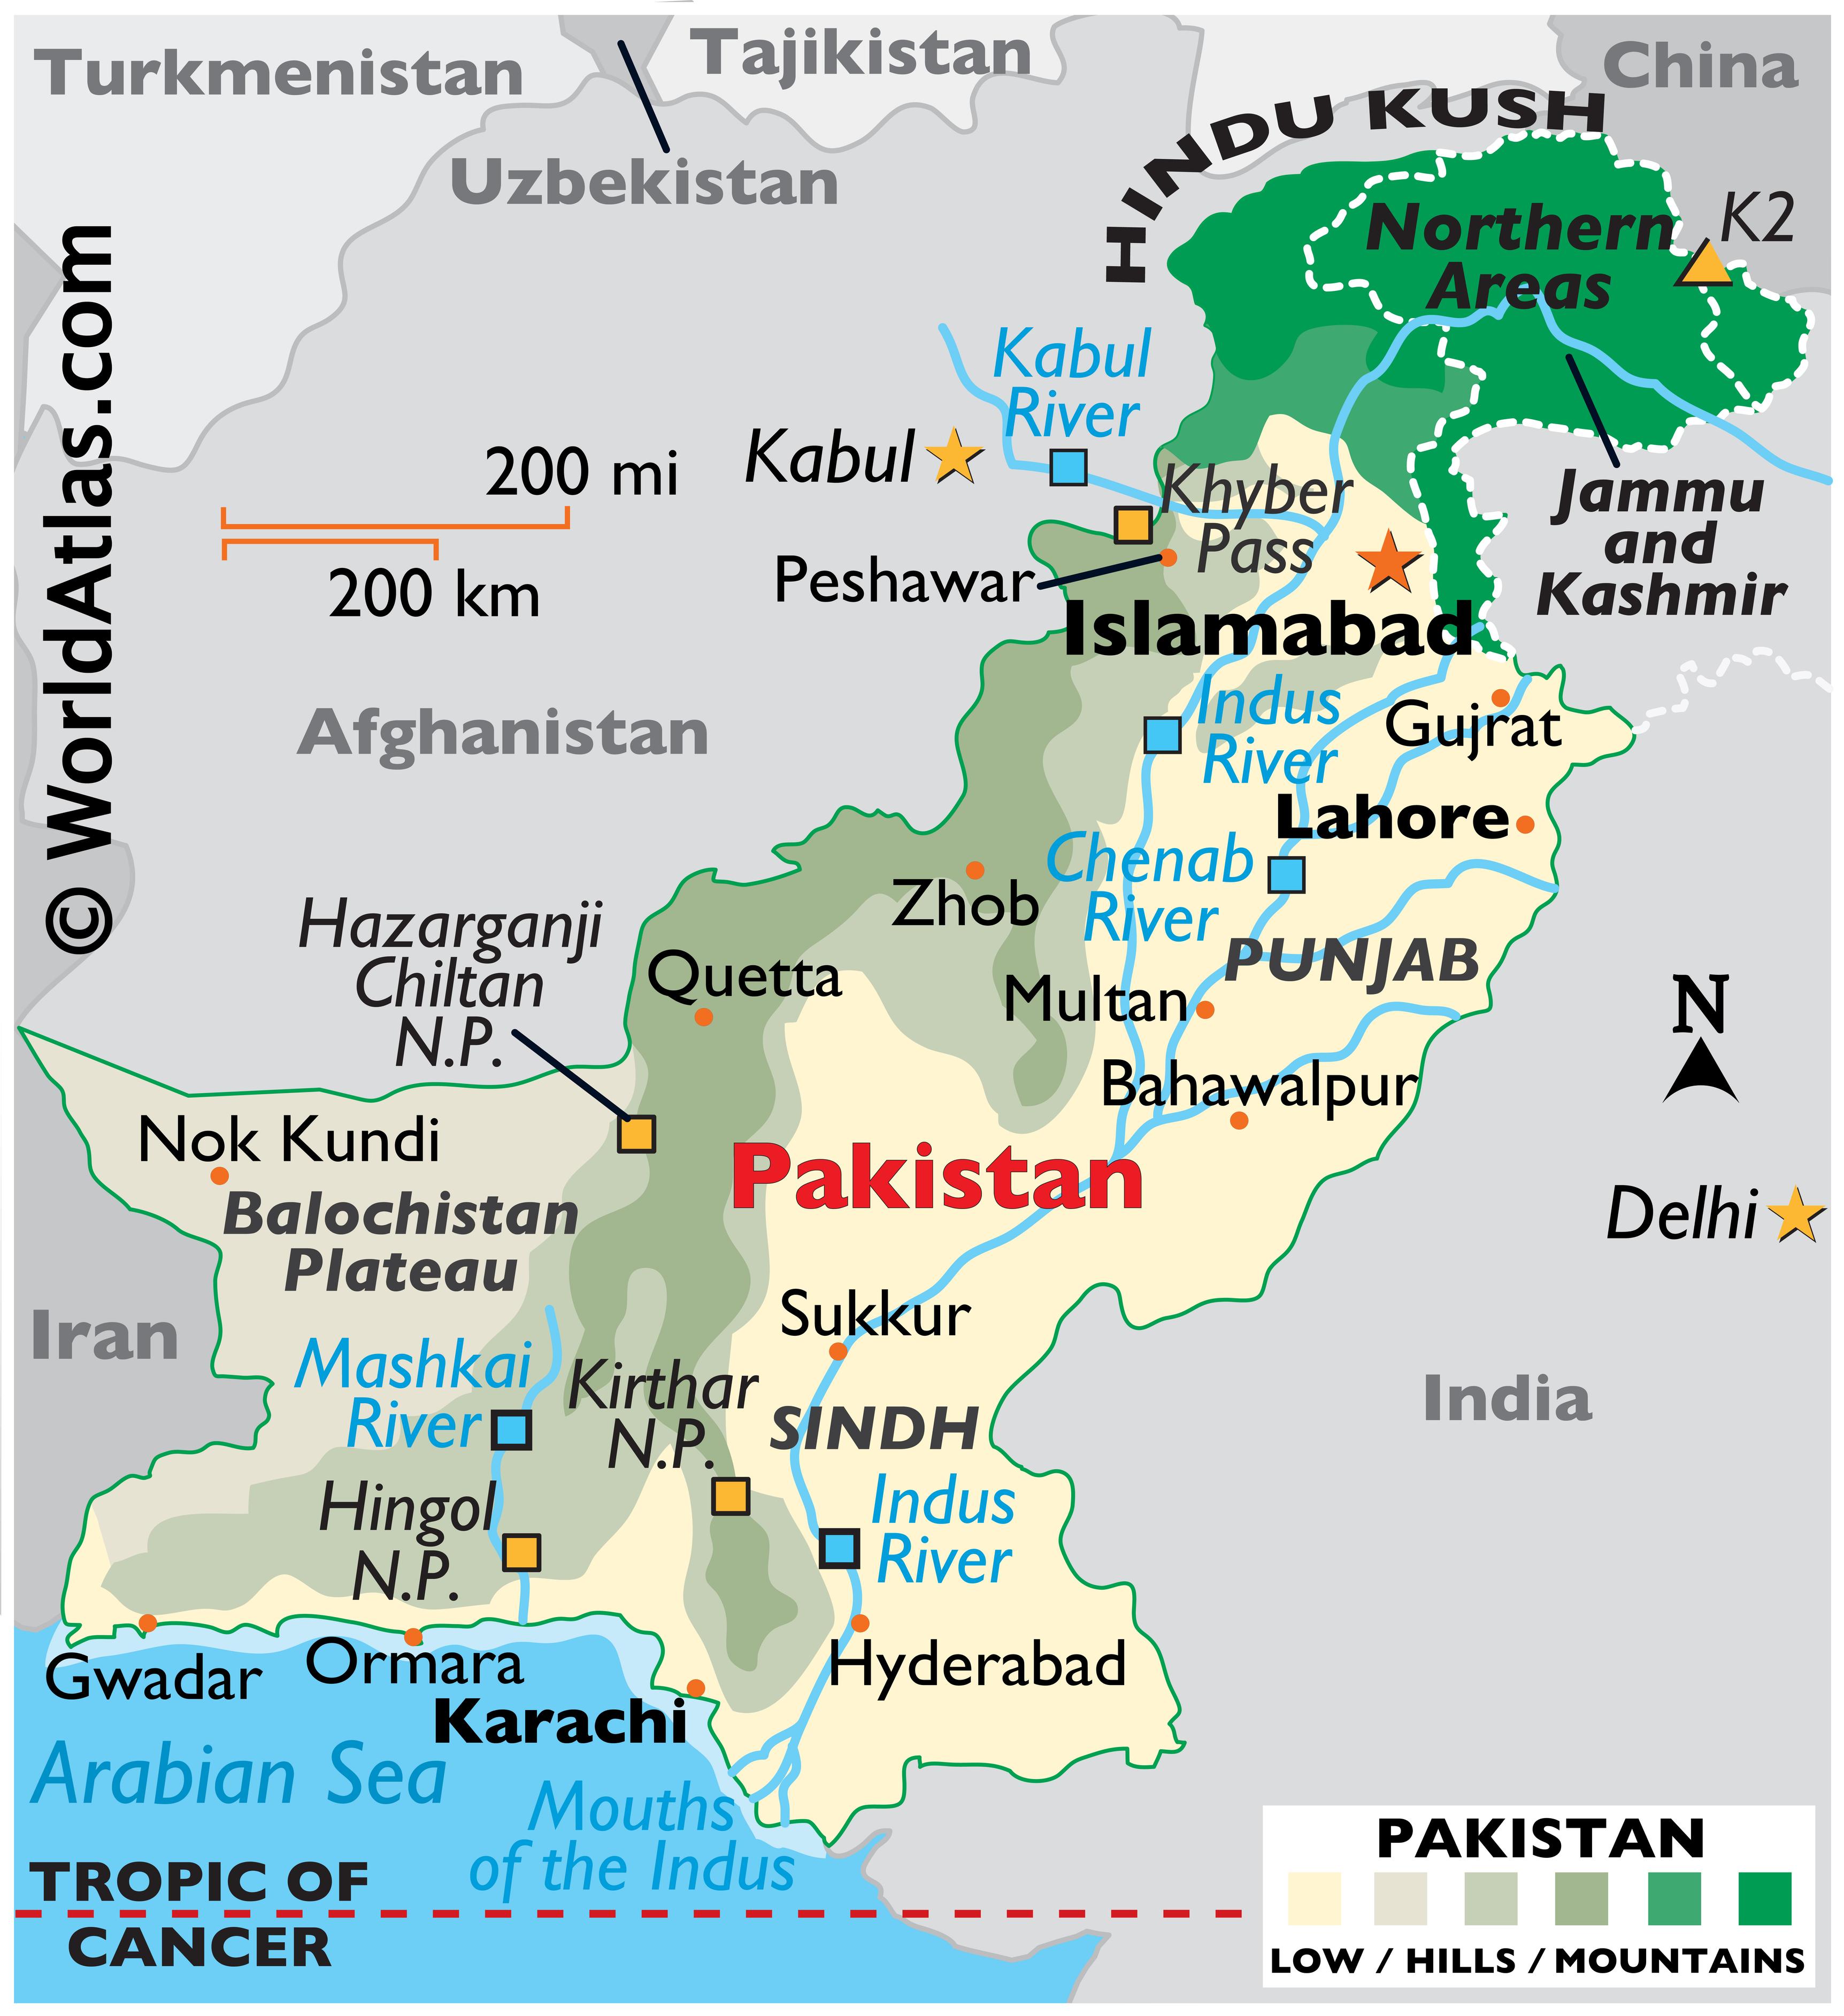 show the map of pakistan Pakistan Map Geography Of Pakistan Map Of Pakistan show the map of pakistan